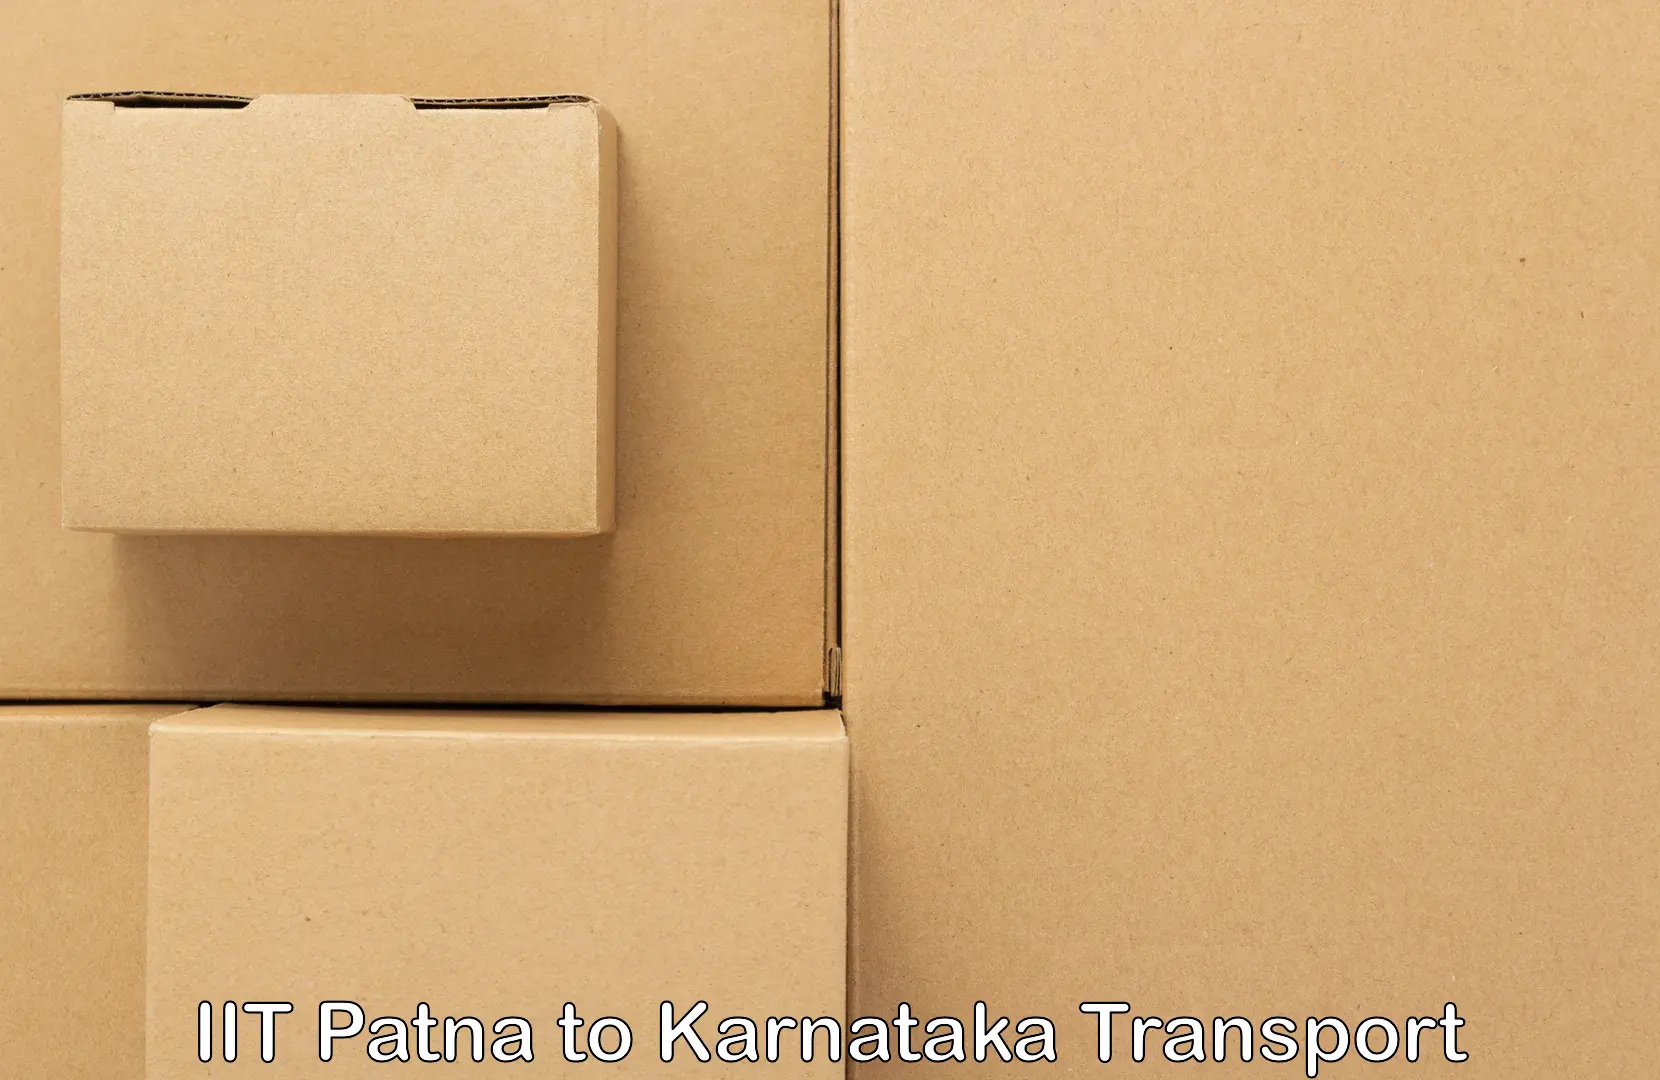 Delivery service IIT Patna to Yenepoya Mangalore